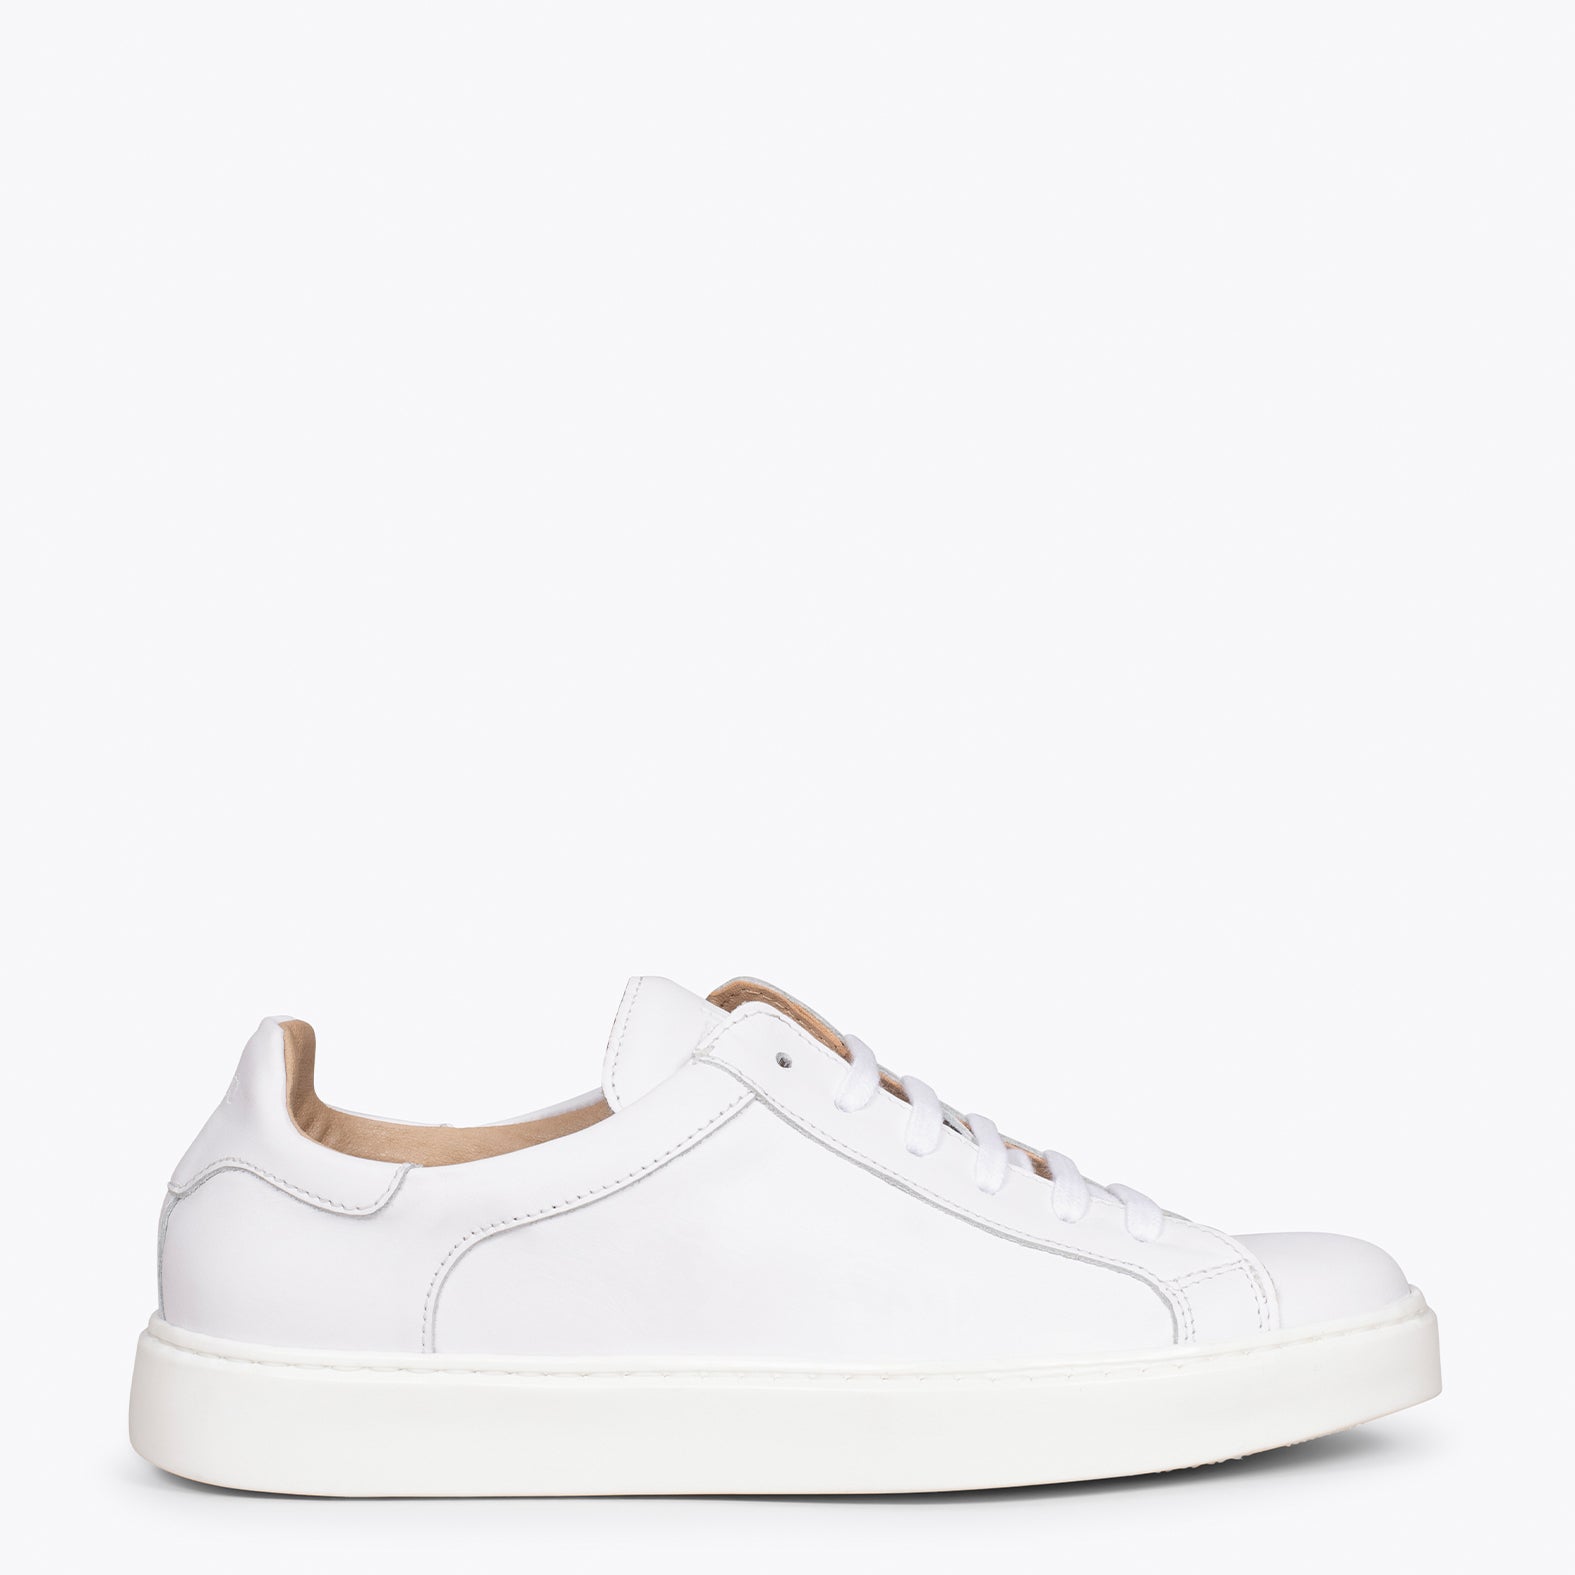 SNEAKER – WHITE casual sneaker